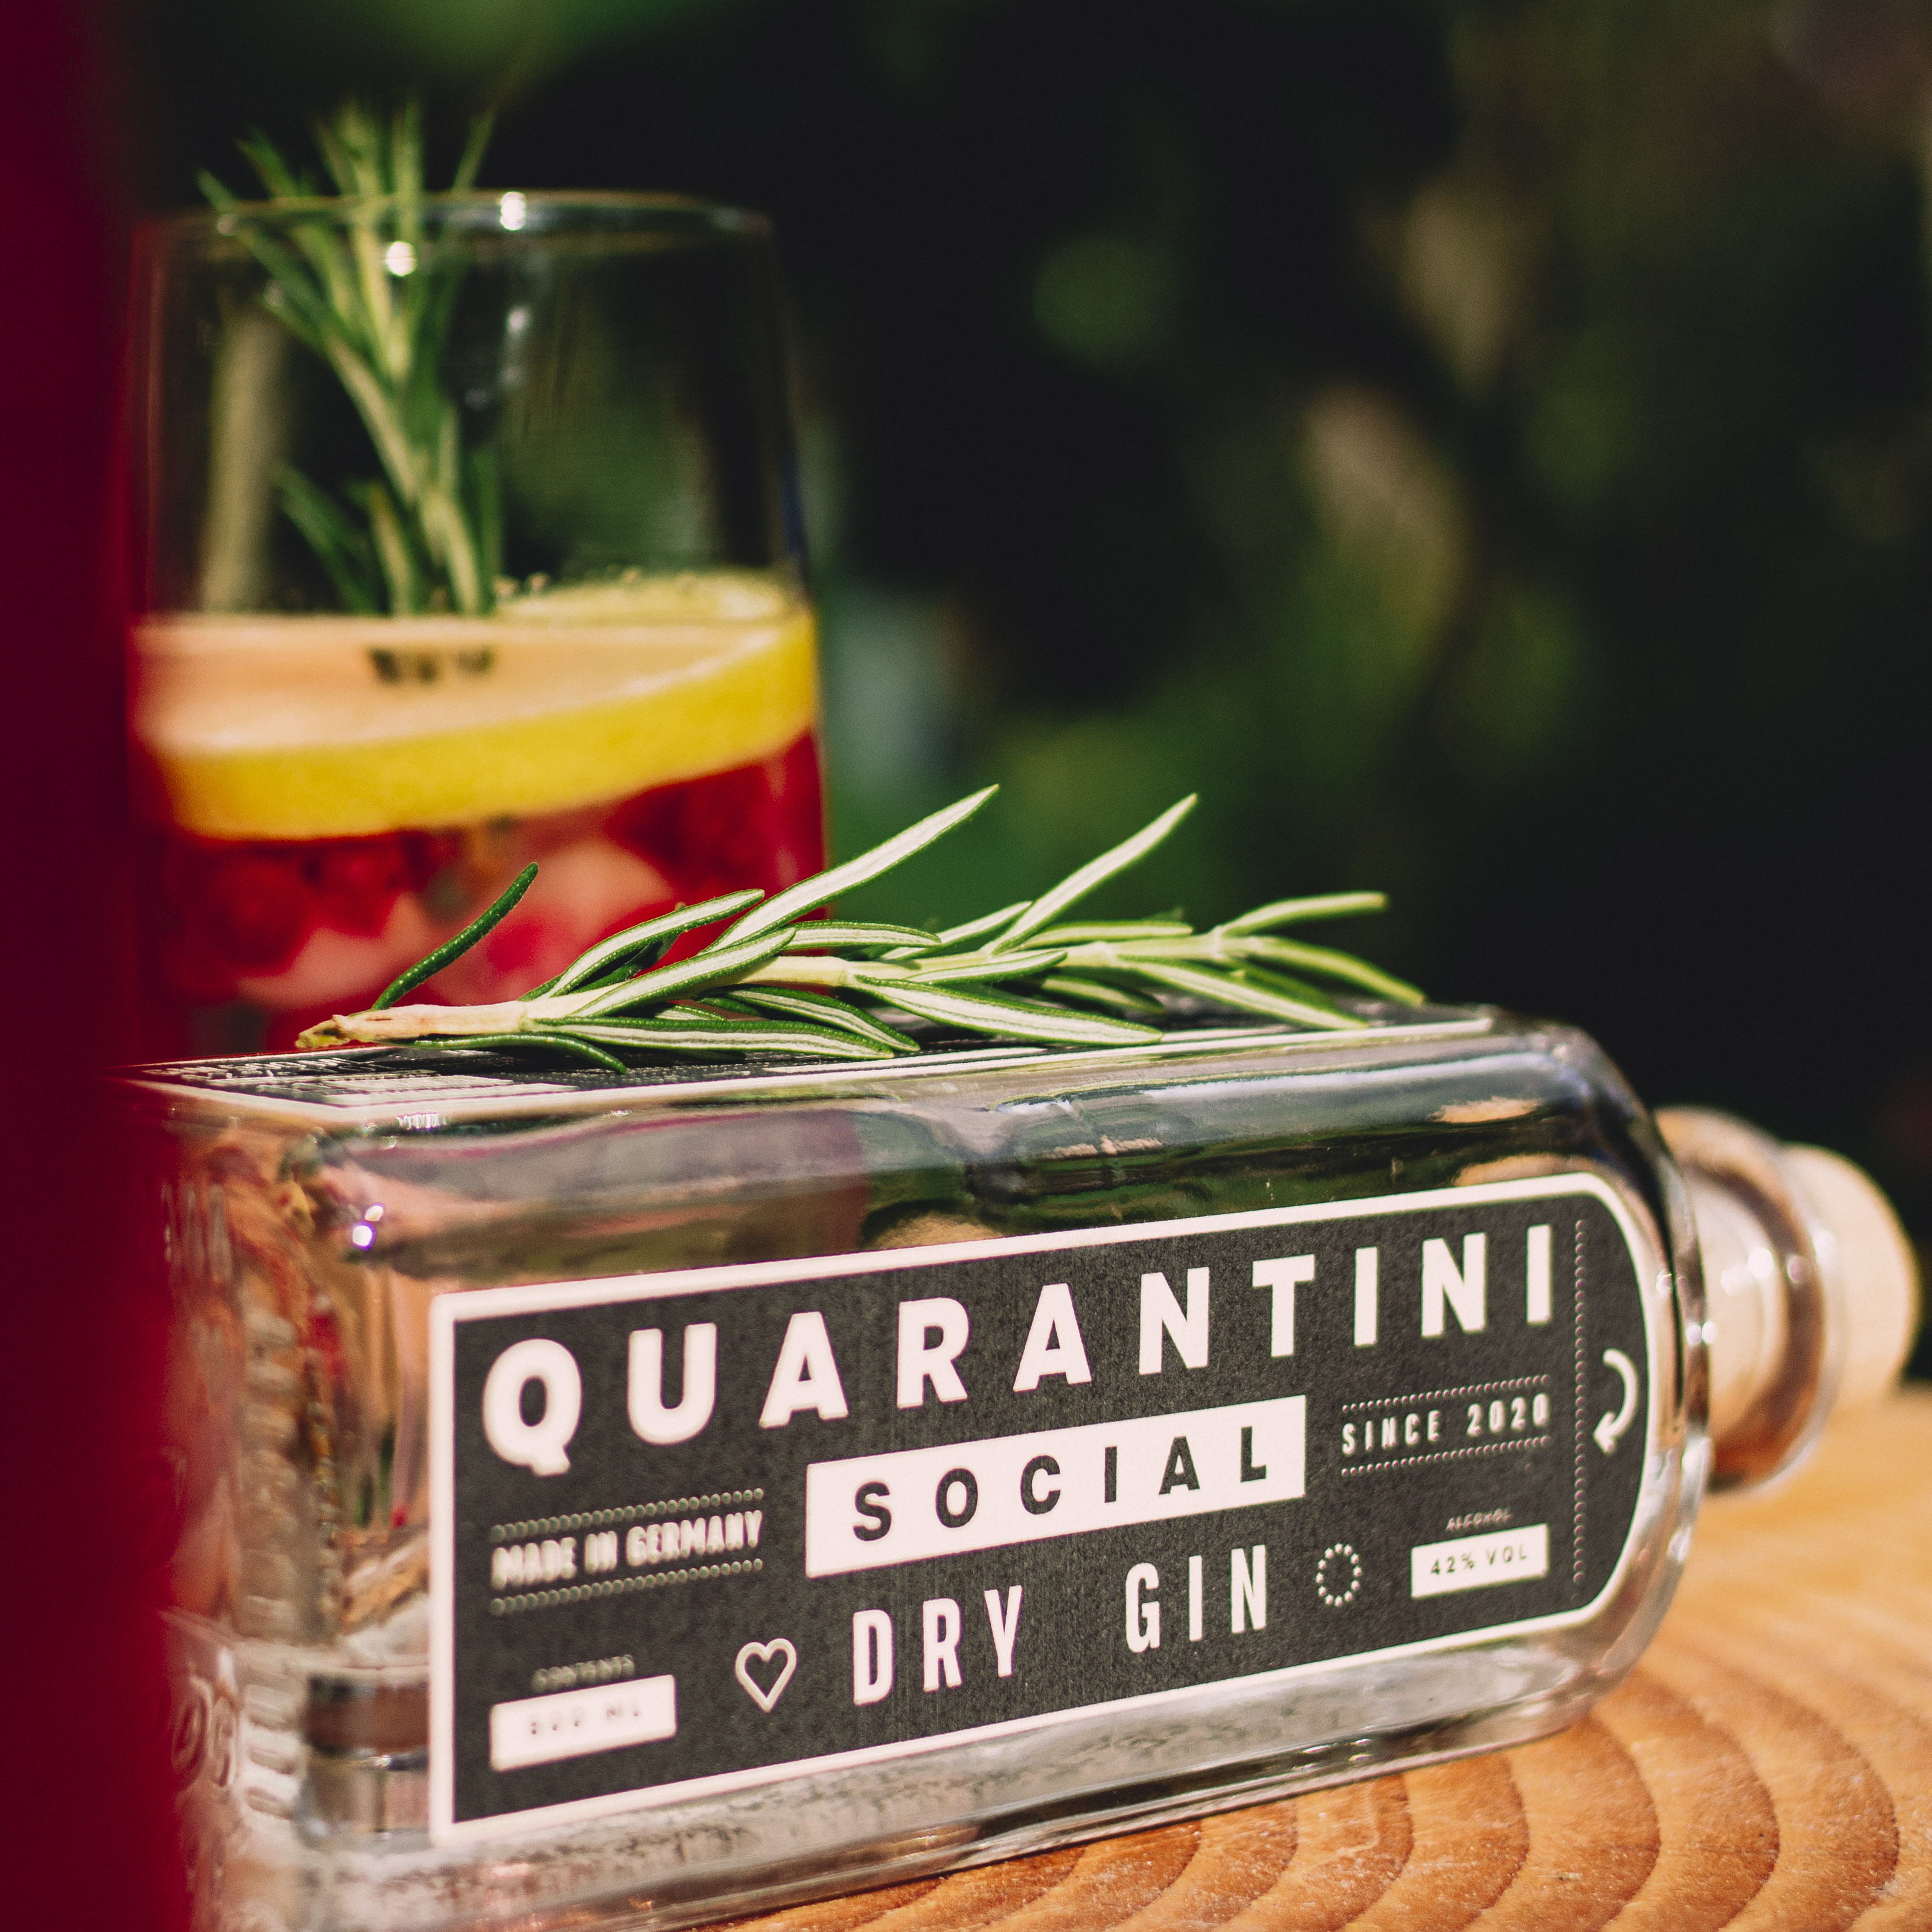 Quarantini Social Dry Gin 42% 0,5l